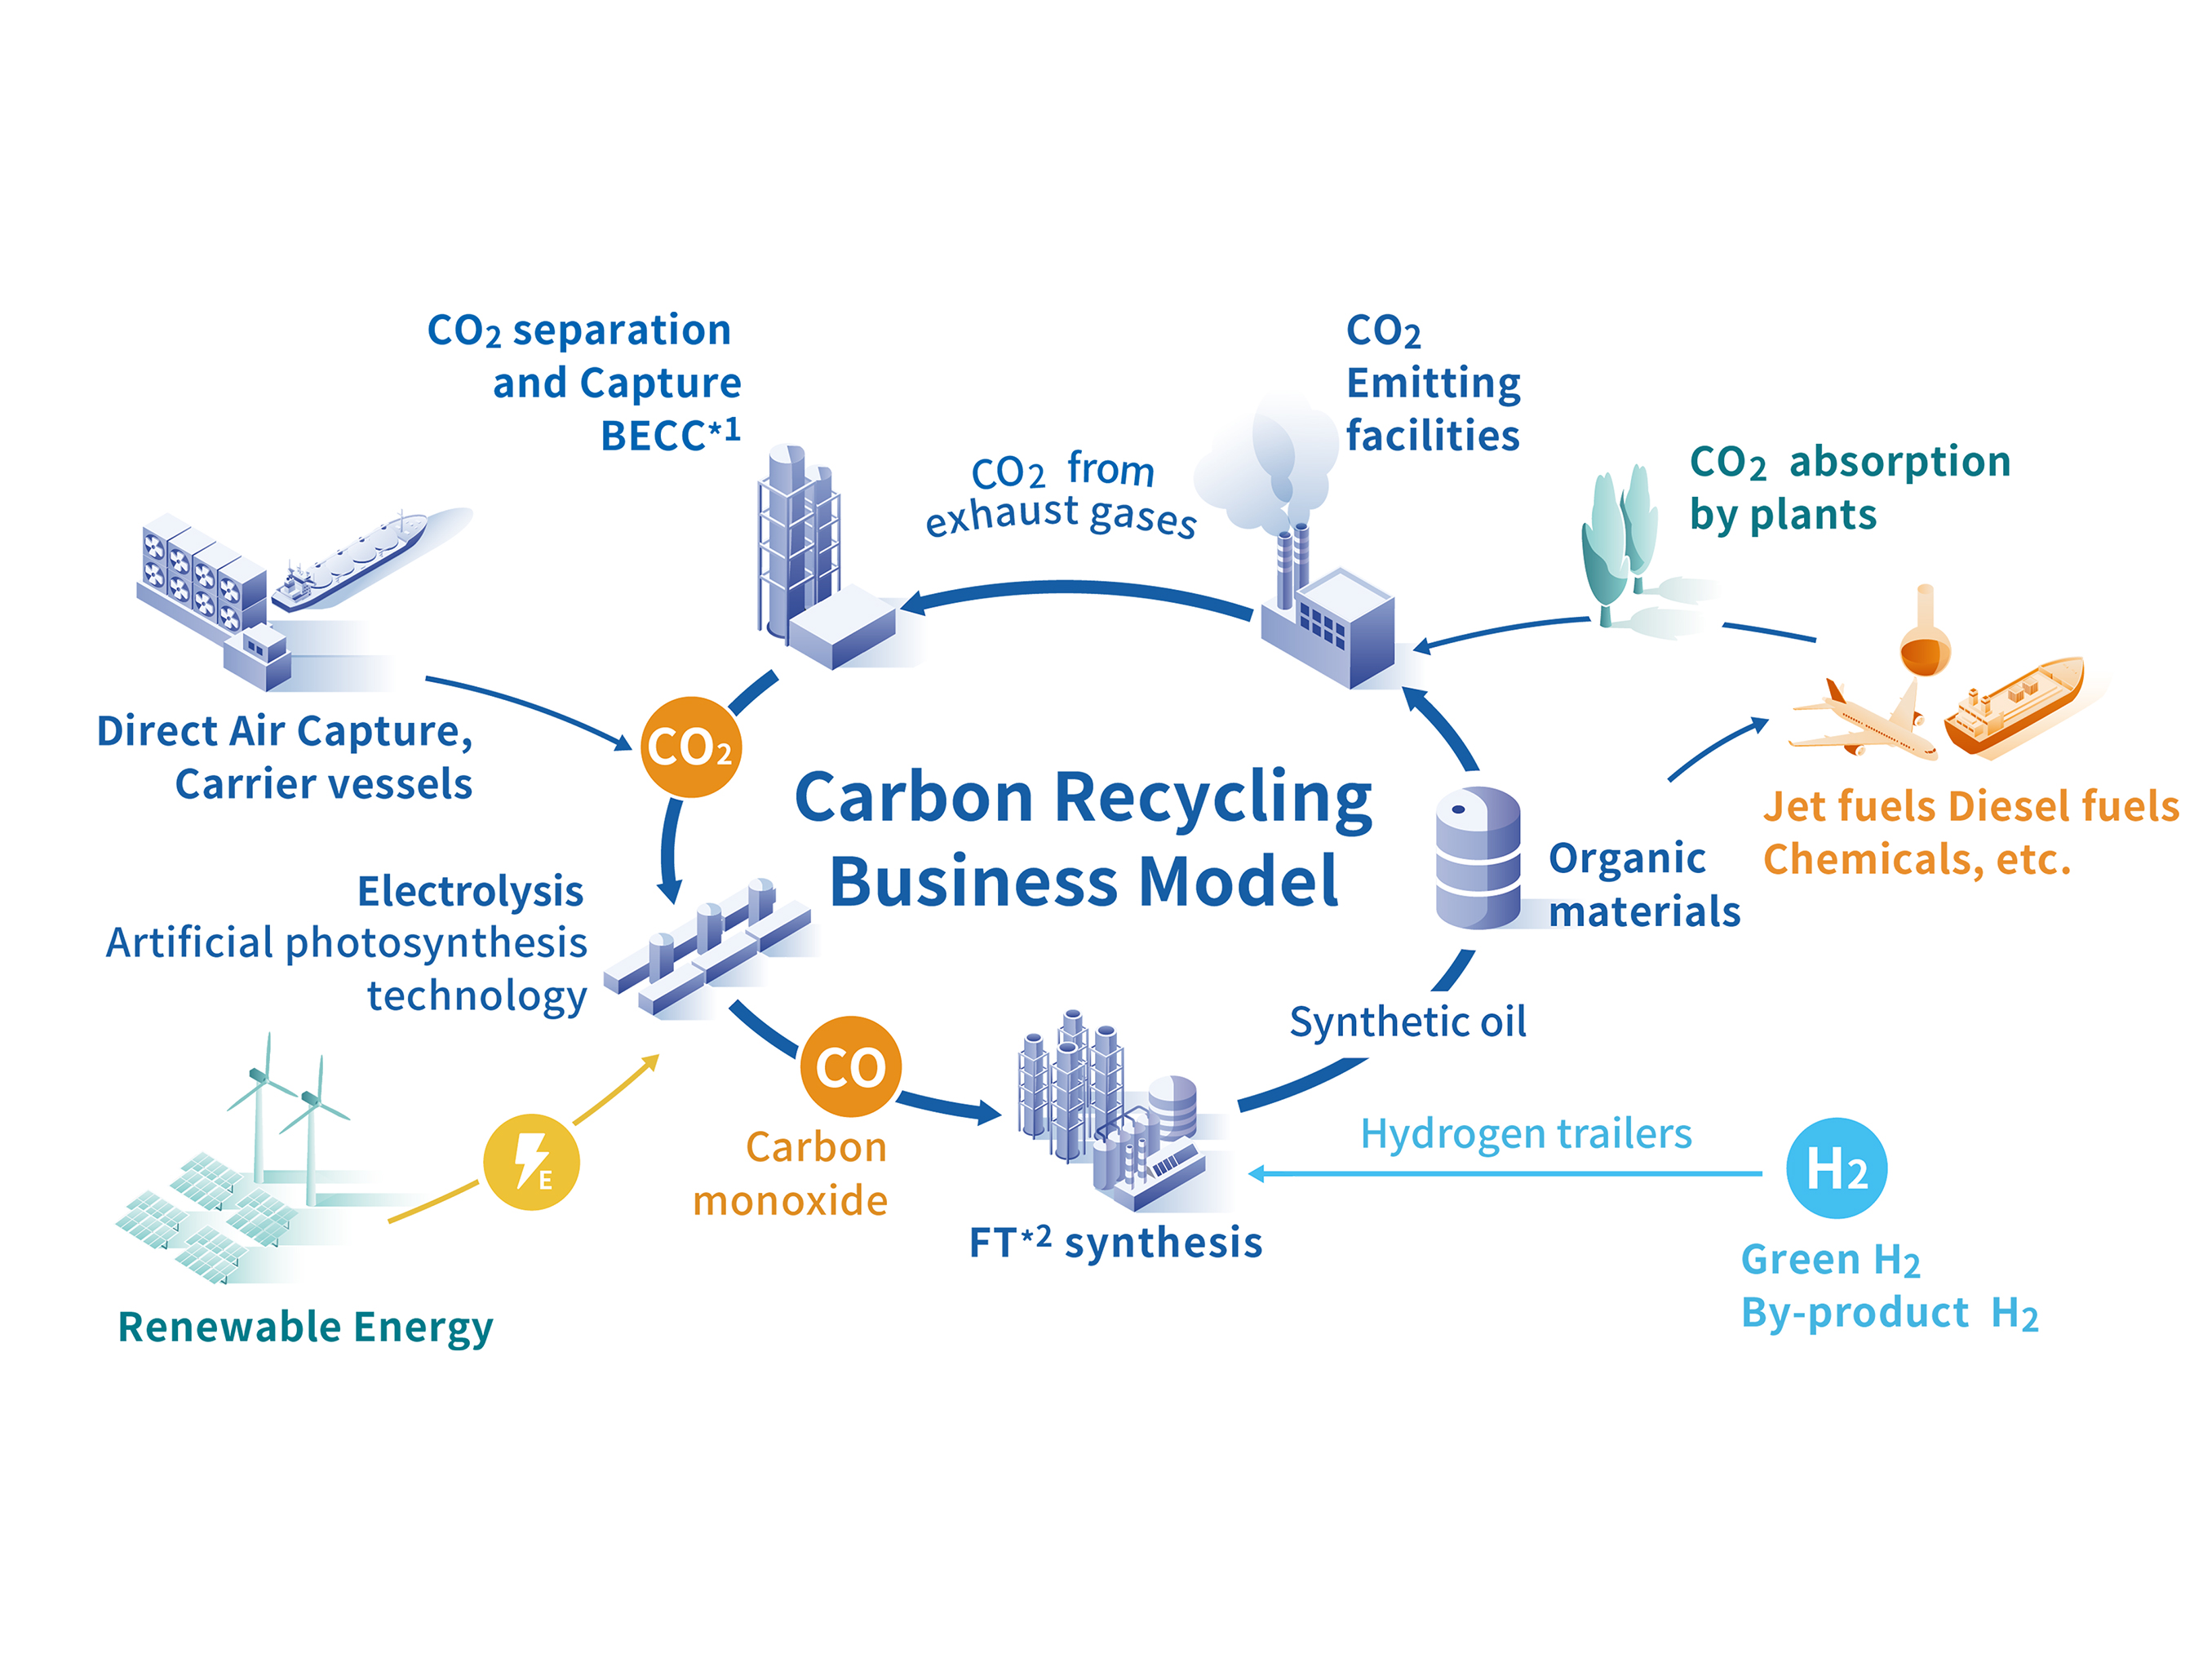 Carbon Recycling (*1 Bioenergy with Carbon Capture, *2 Fischer-Tropsch process)